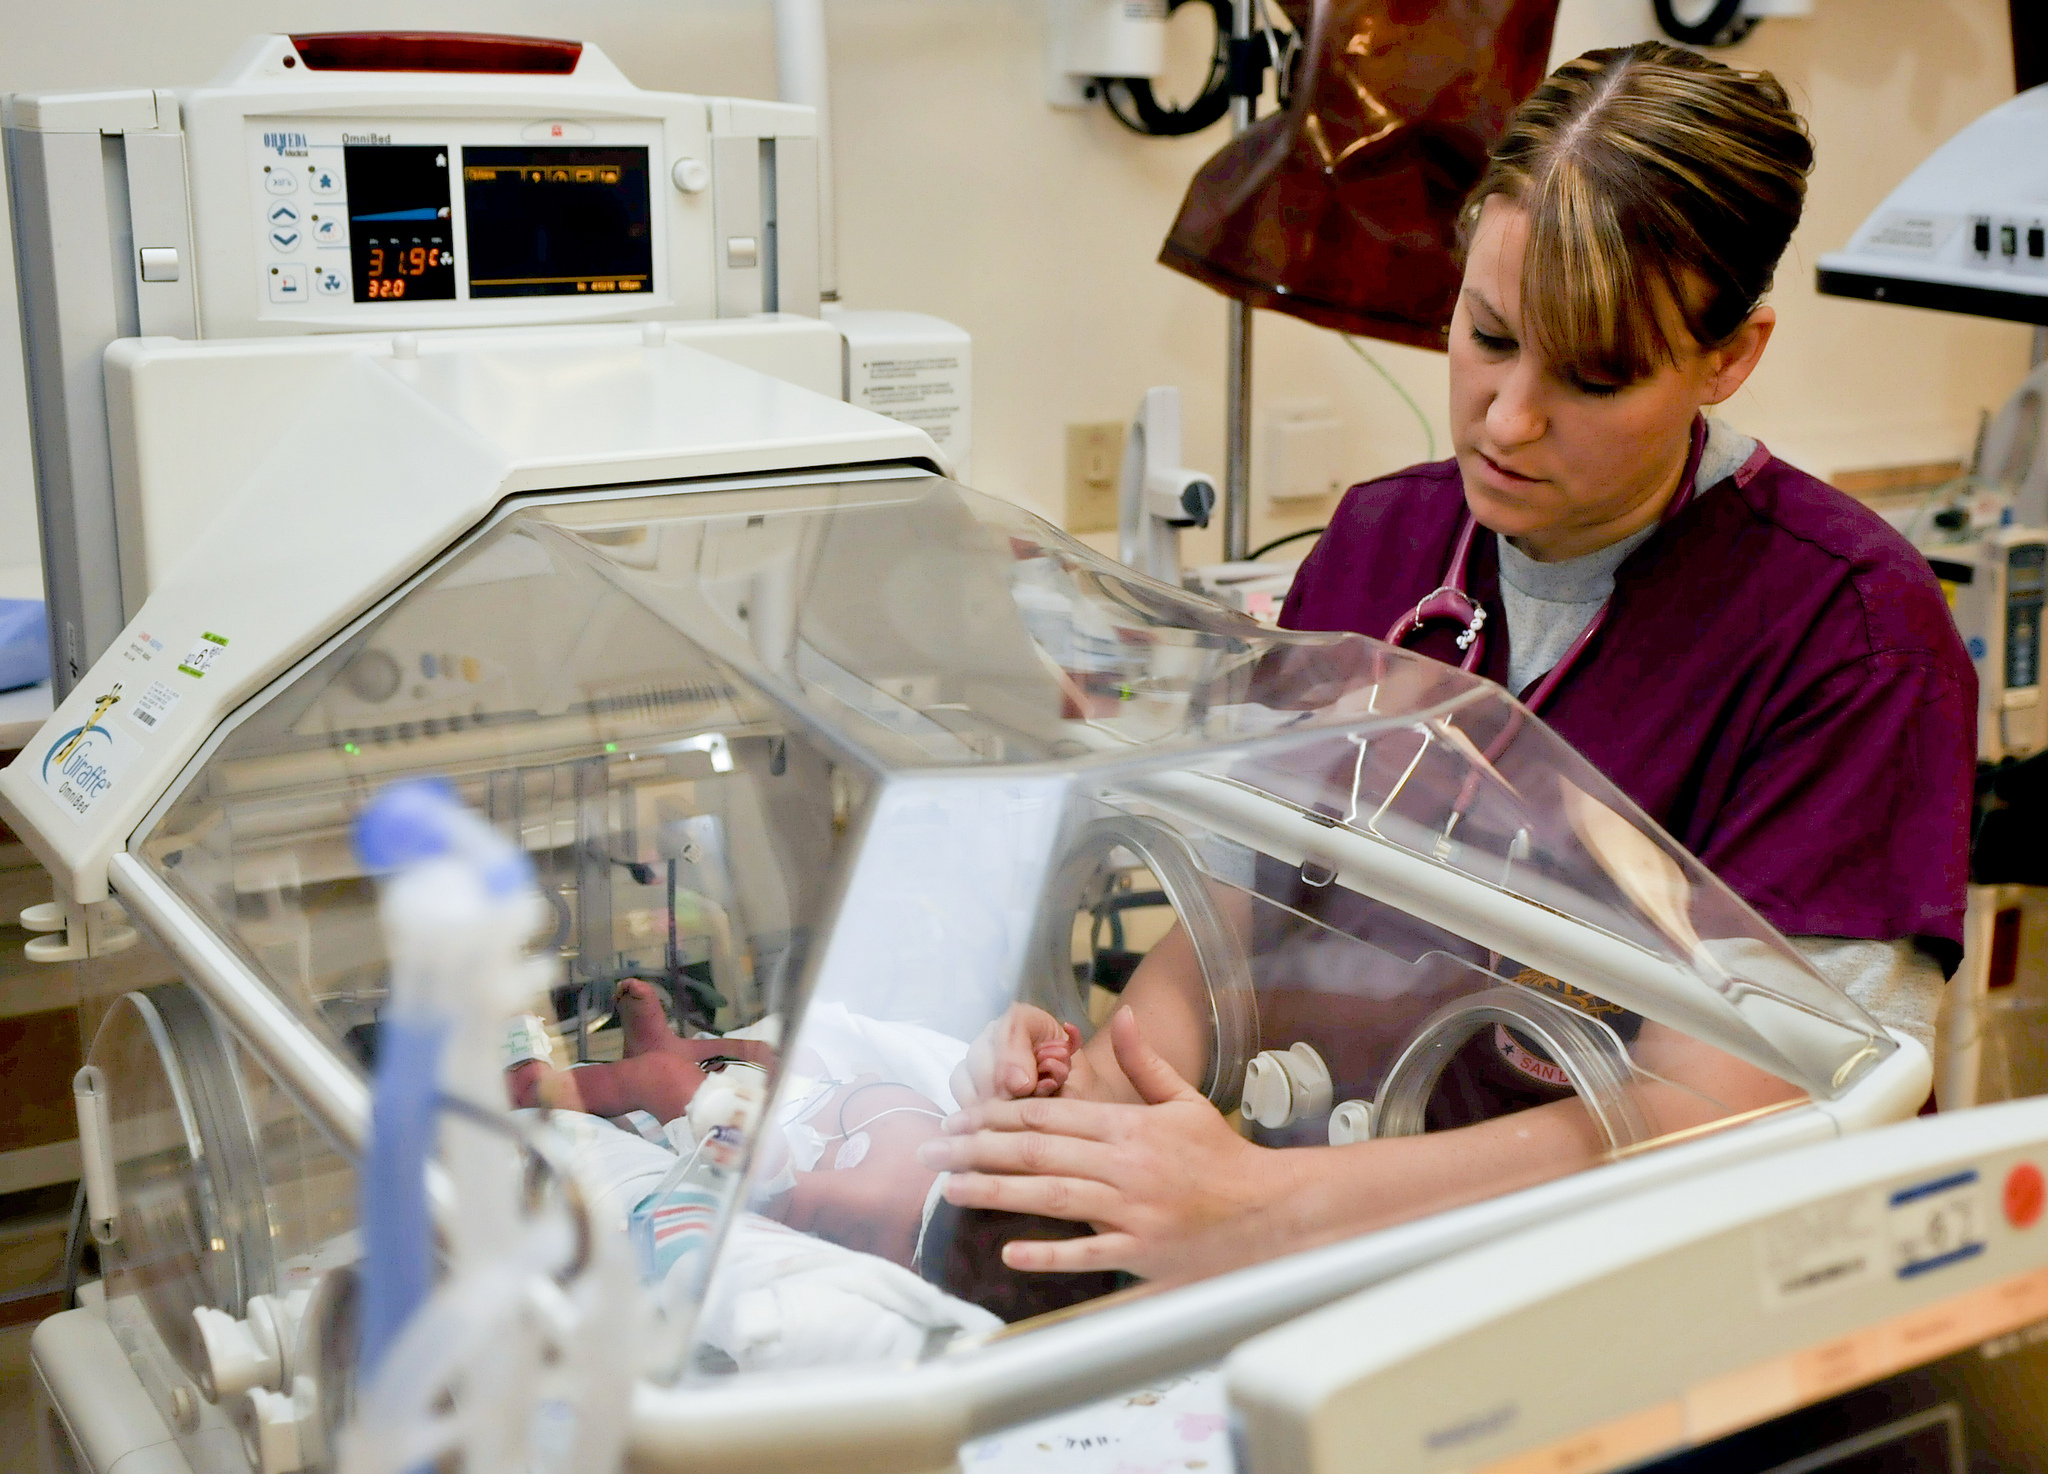 A nurse examines a newborn baby through a transport incubator